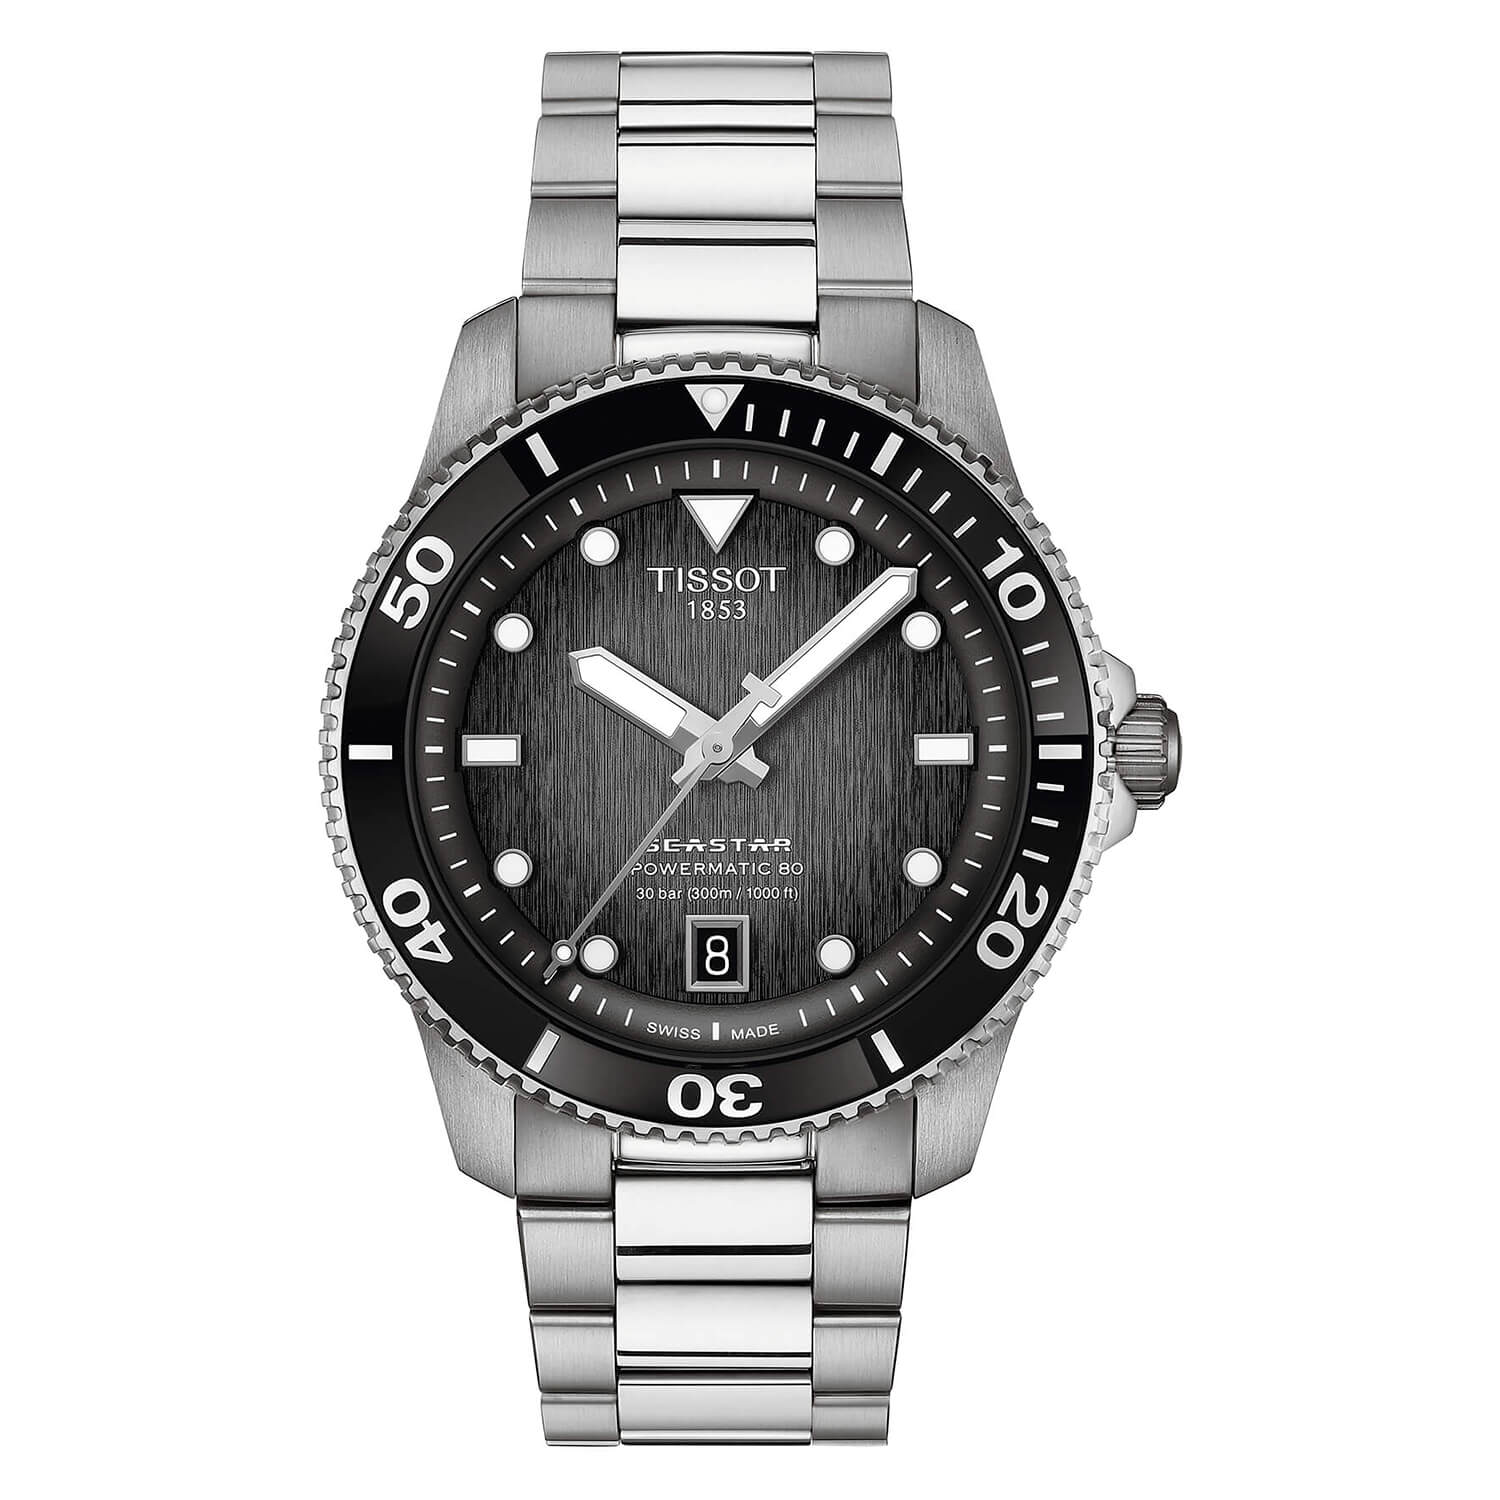 Photos - Wrist Watch TISSOT Seastar 1000 Powermatic 80 40mm Black Dial Silver Steel Bracelet Wa 